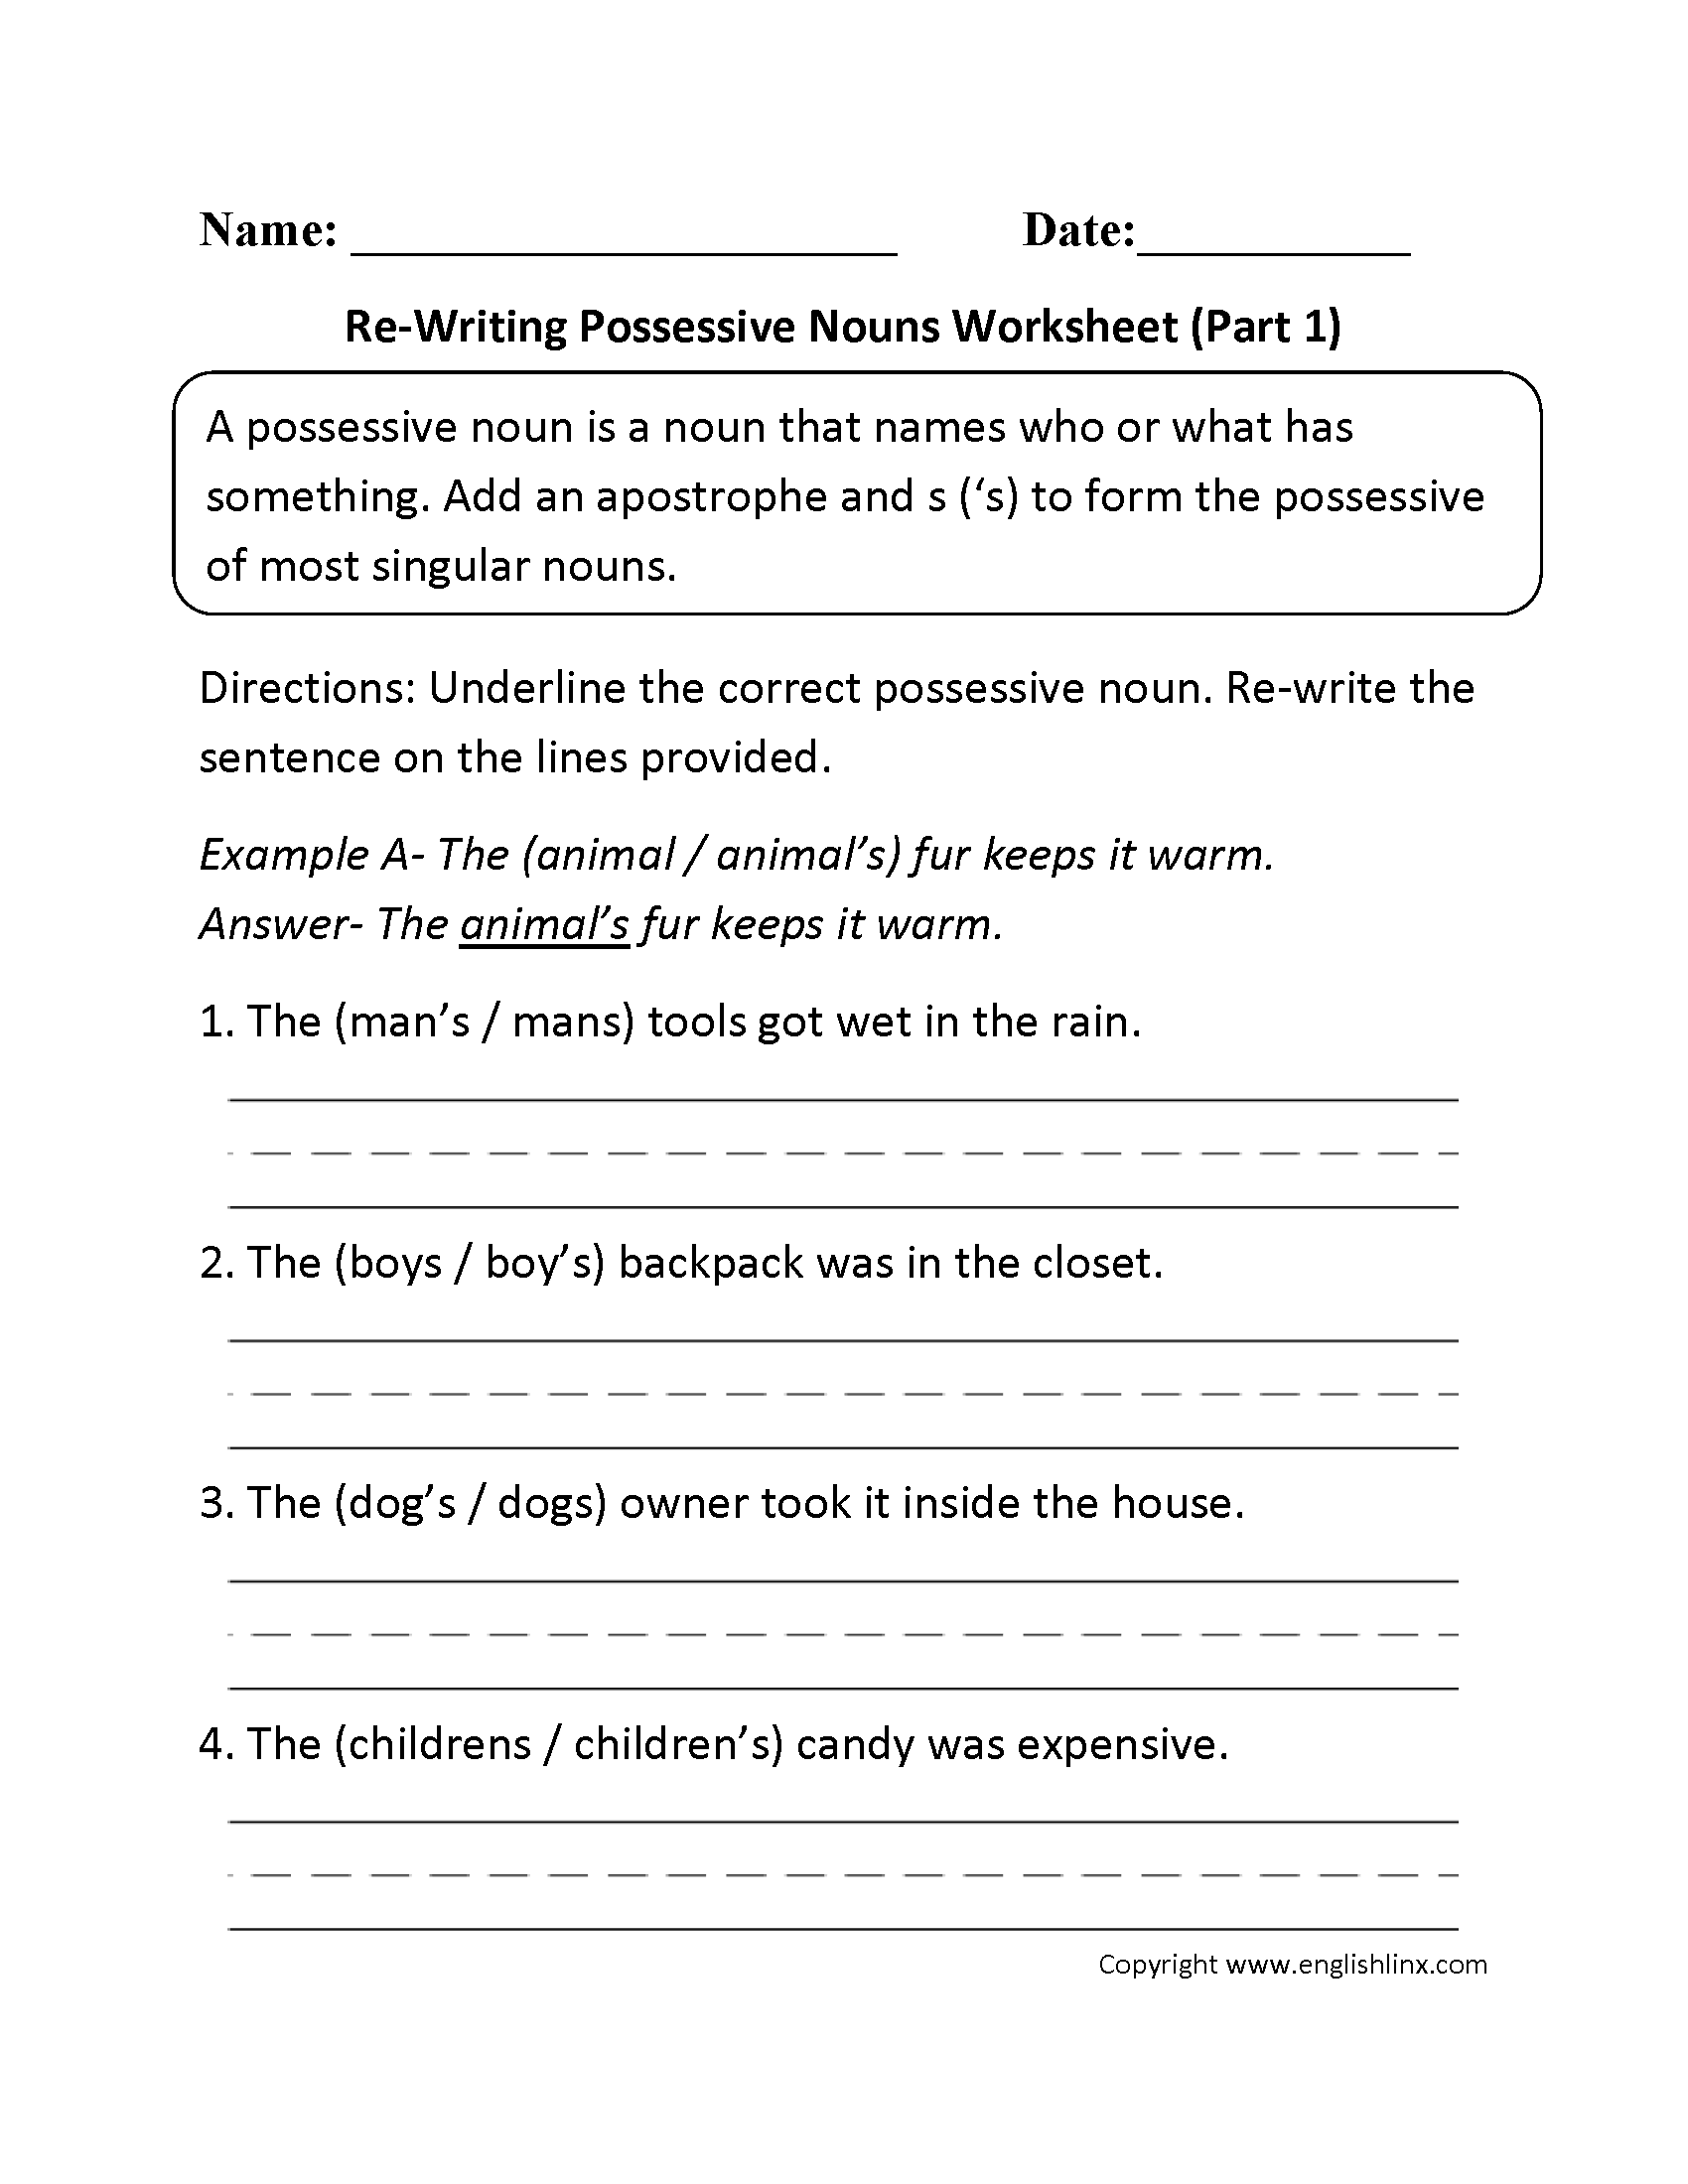 possessive-nouns-worksheets-re-writing-possessive-nouns-worksheet-part-1